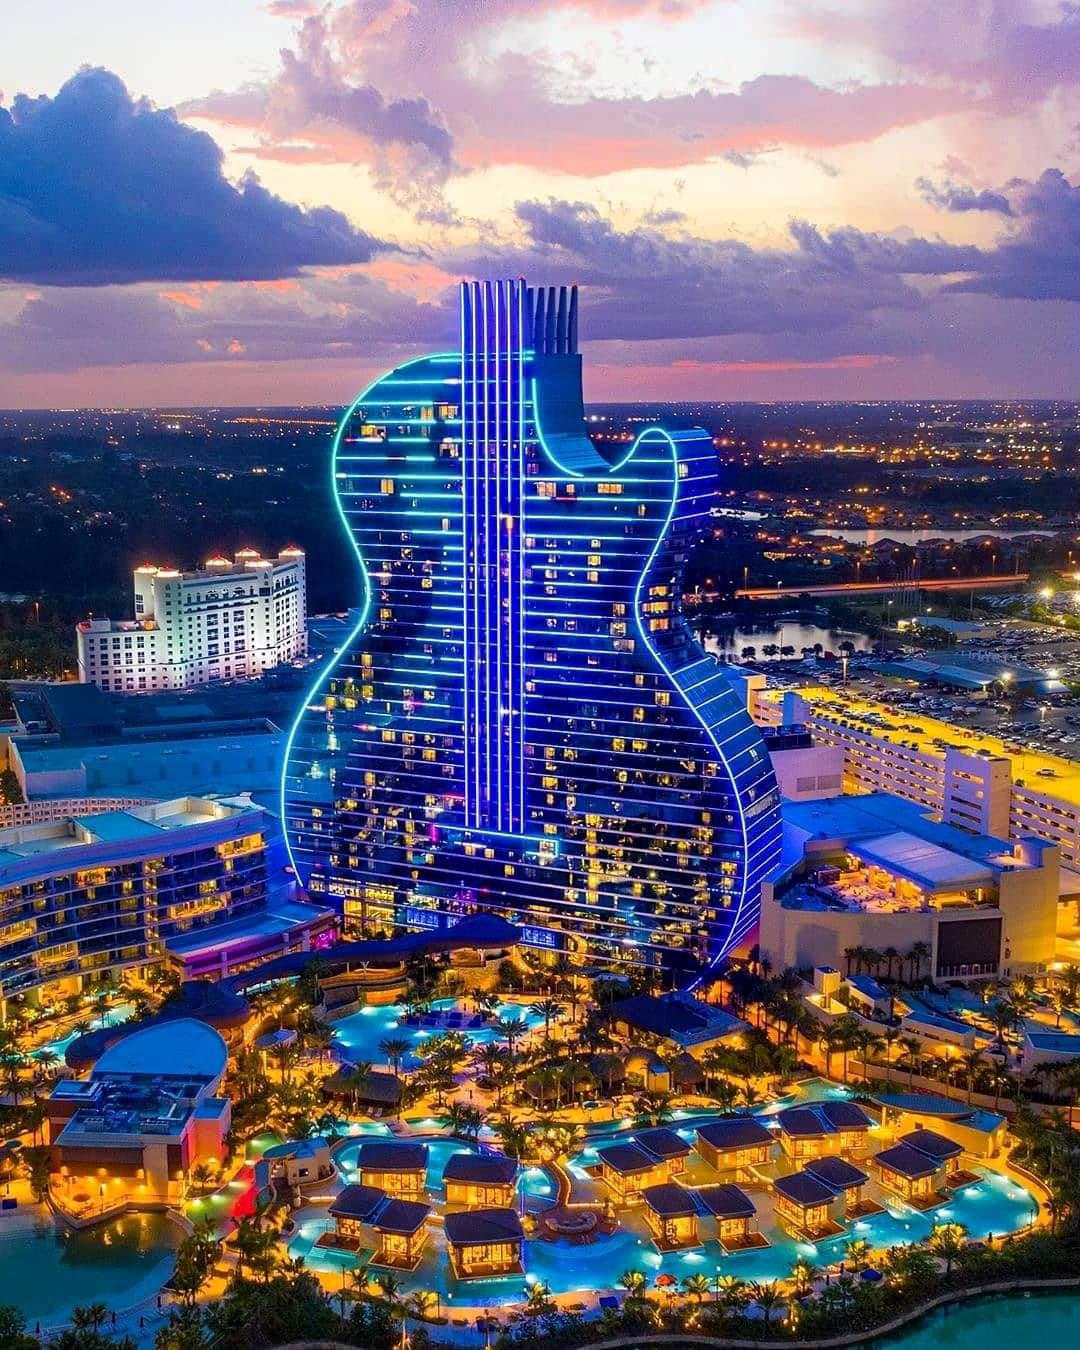 The Guitar Hotel, South Florida